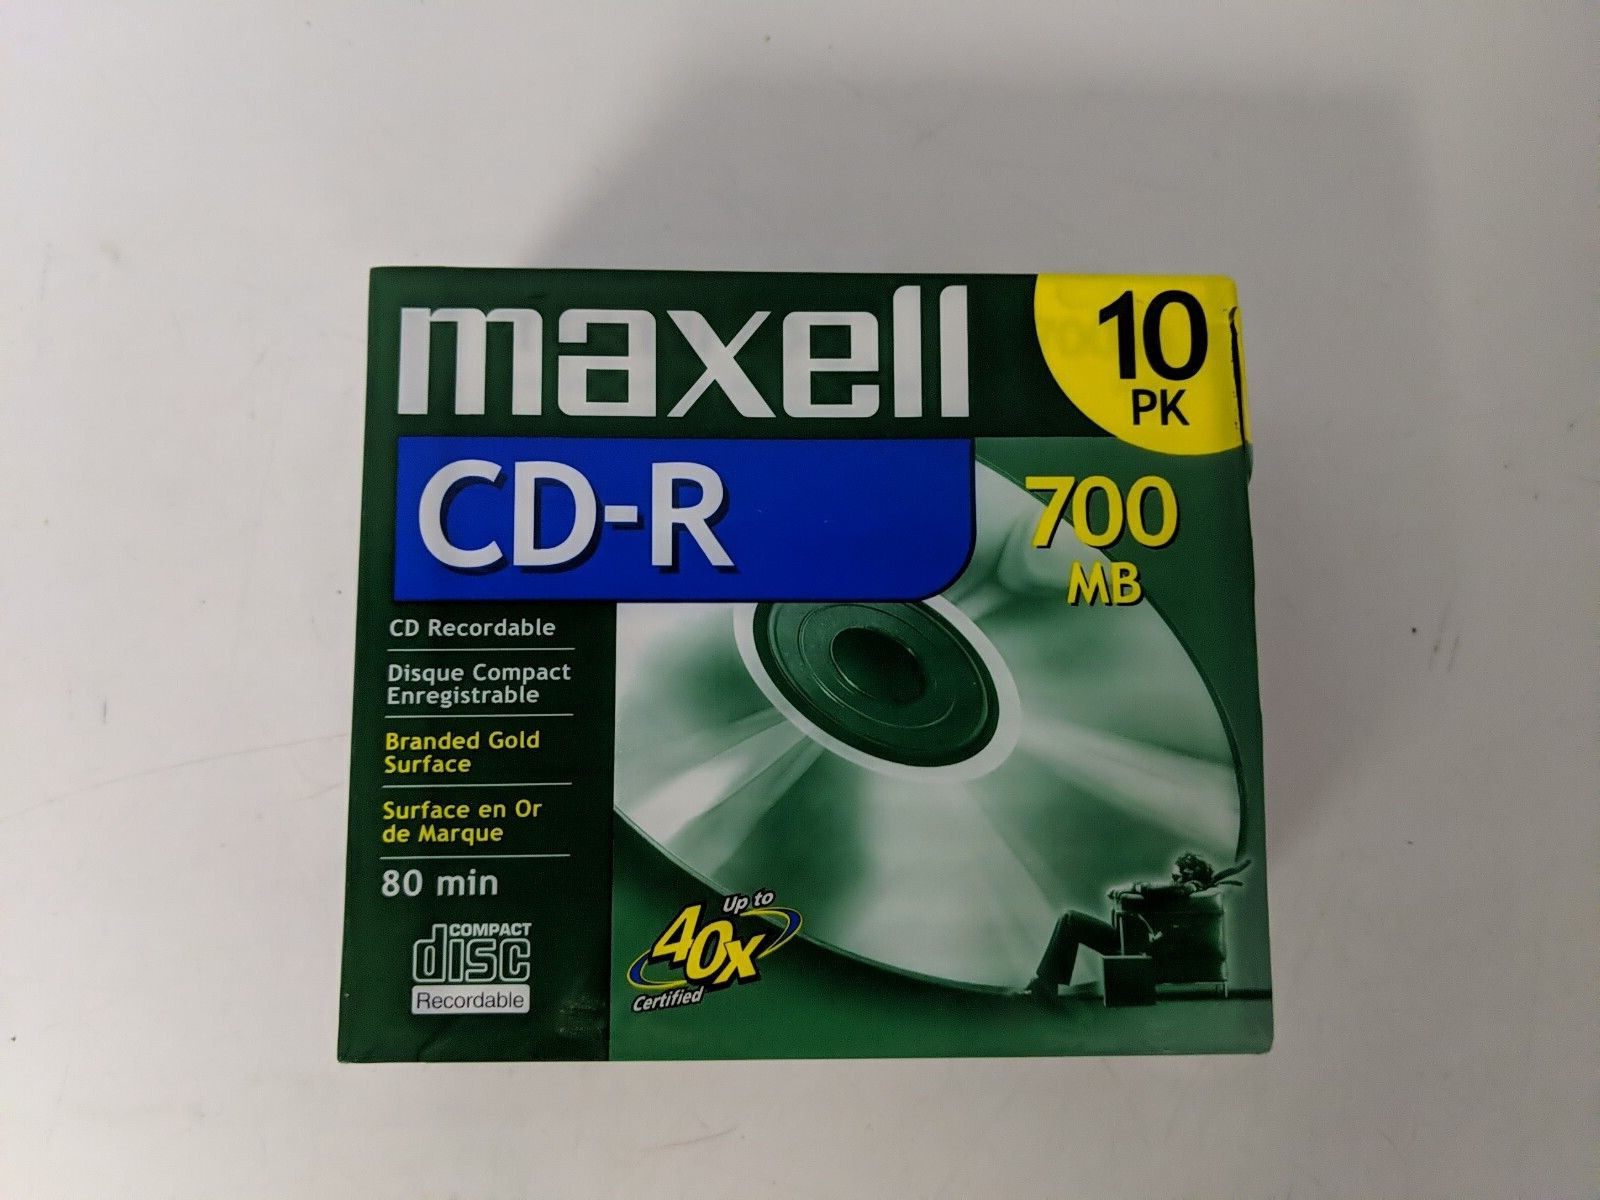 MAXELL CD-R  CD RECORDABLE 700 MB 80 MIN 700 MB 10PK